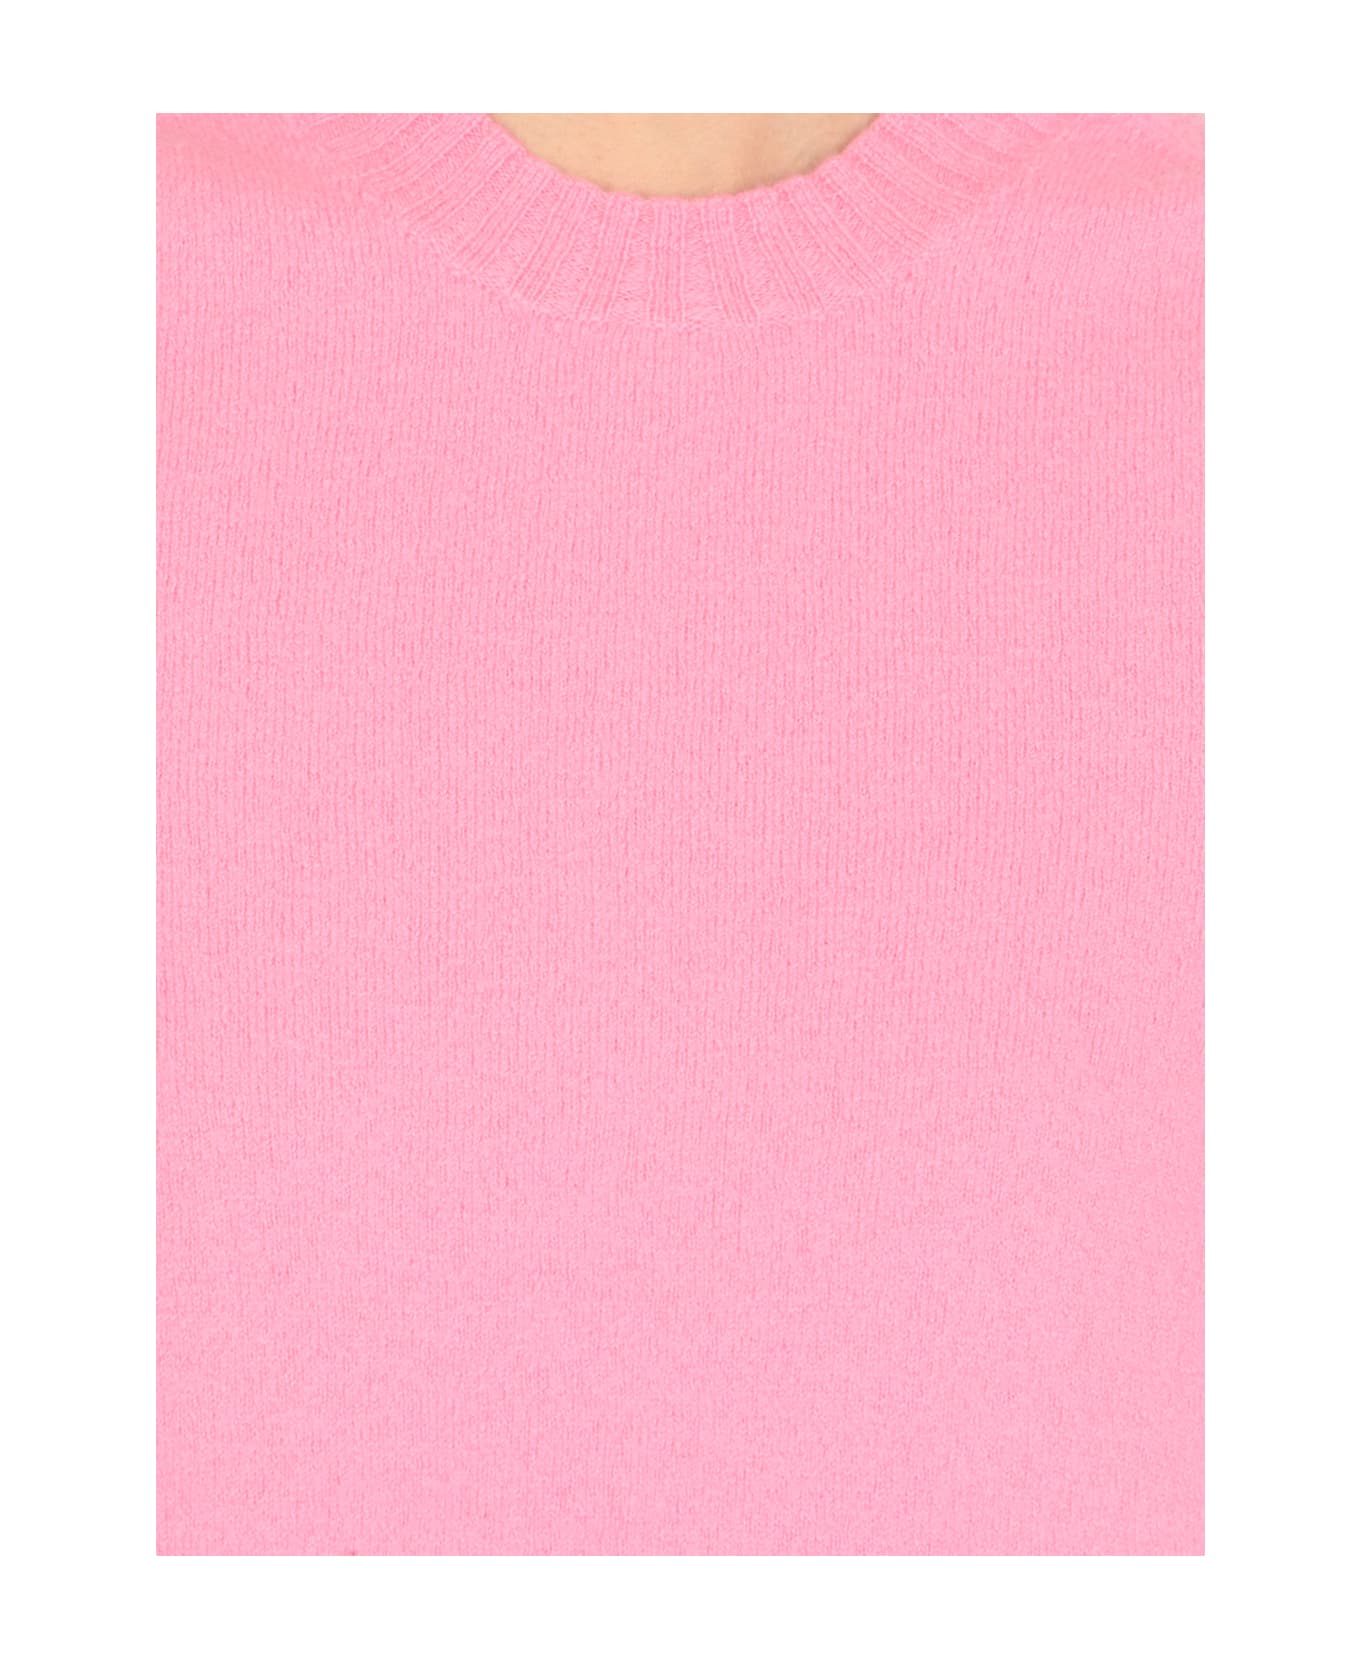 Jil Sander Wool Sweater - Pink ニットウェア